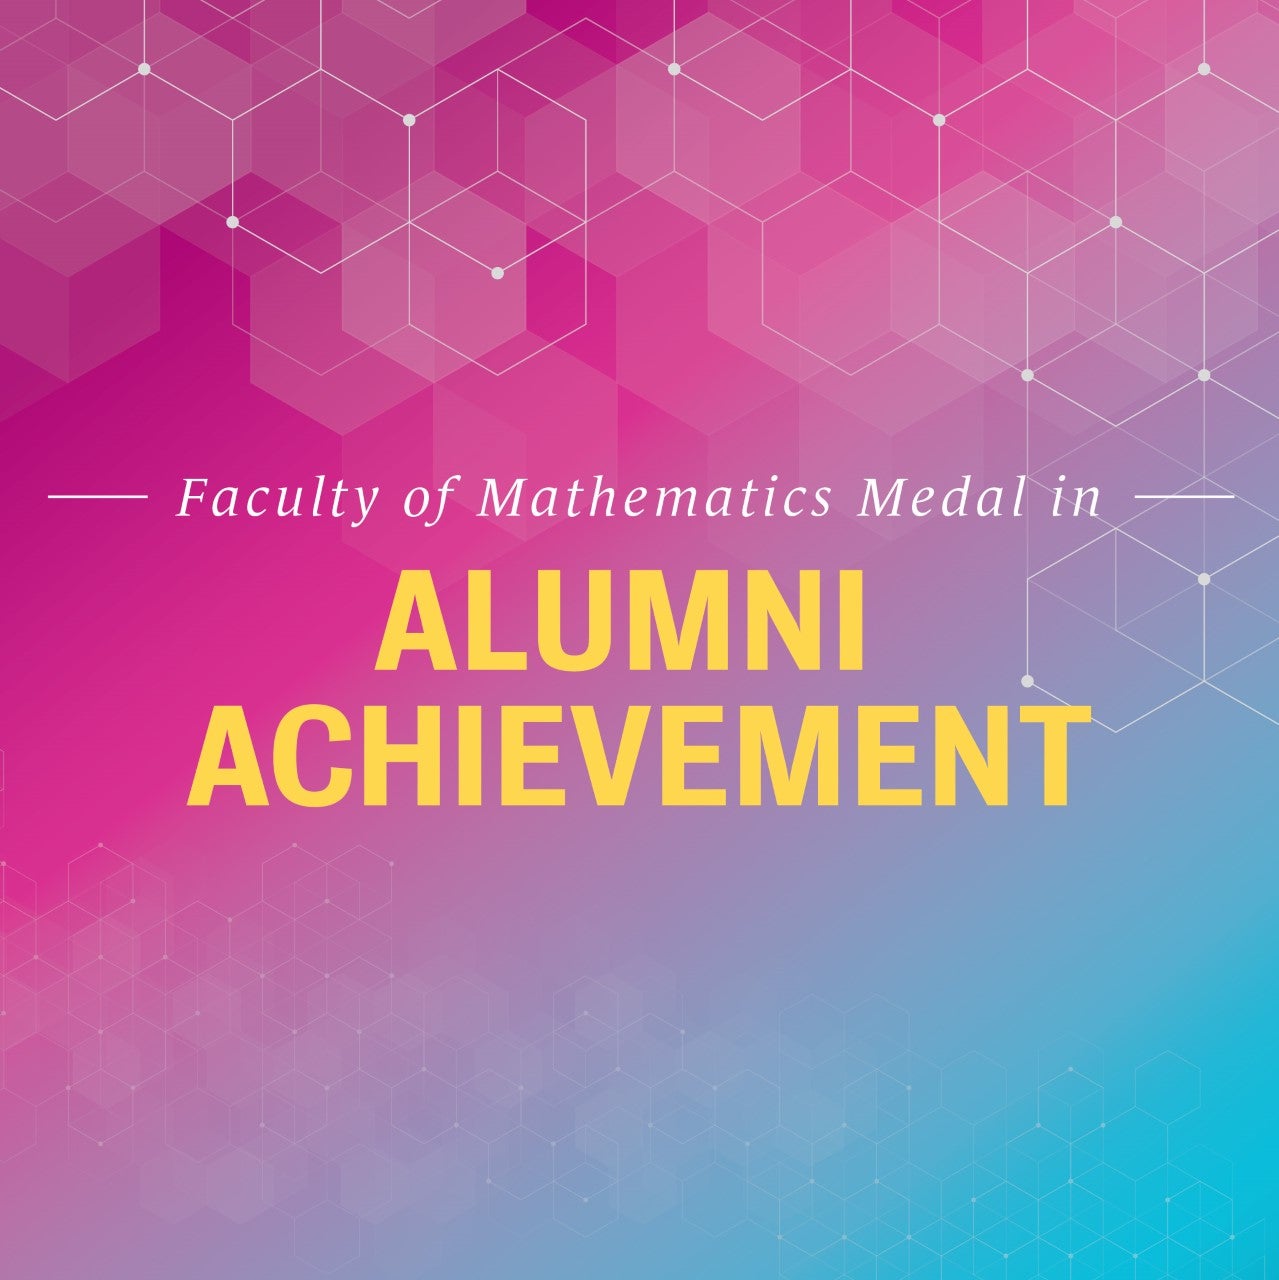 alumni achievement banner pink, gold, teal with hexagons